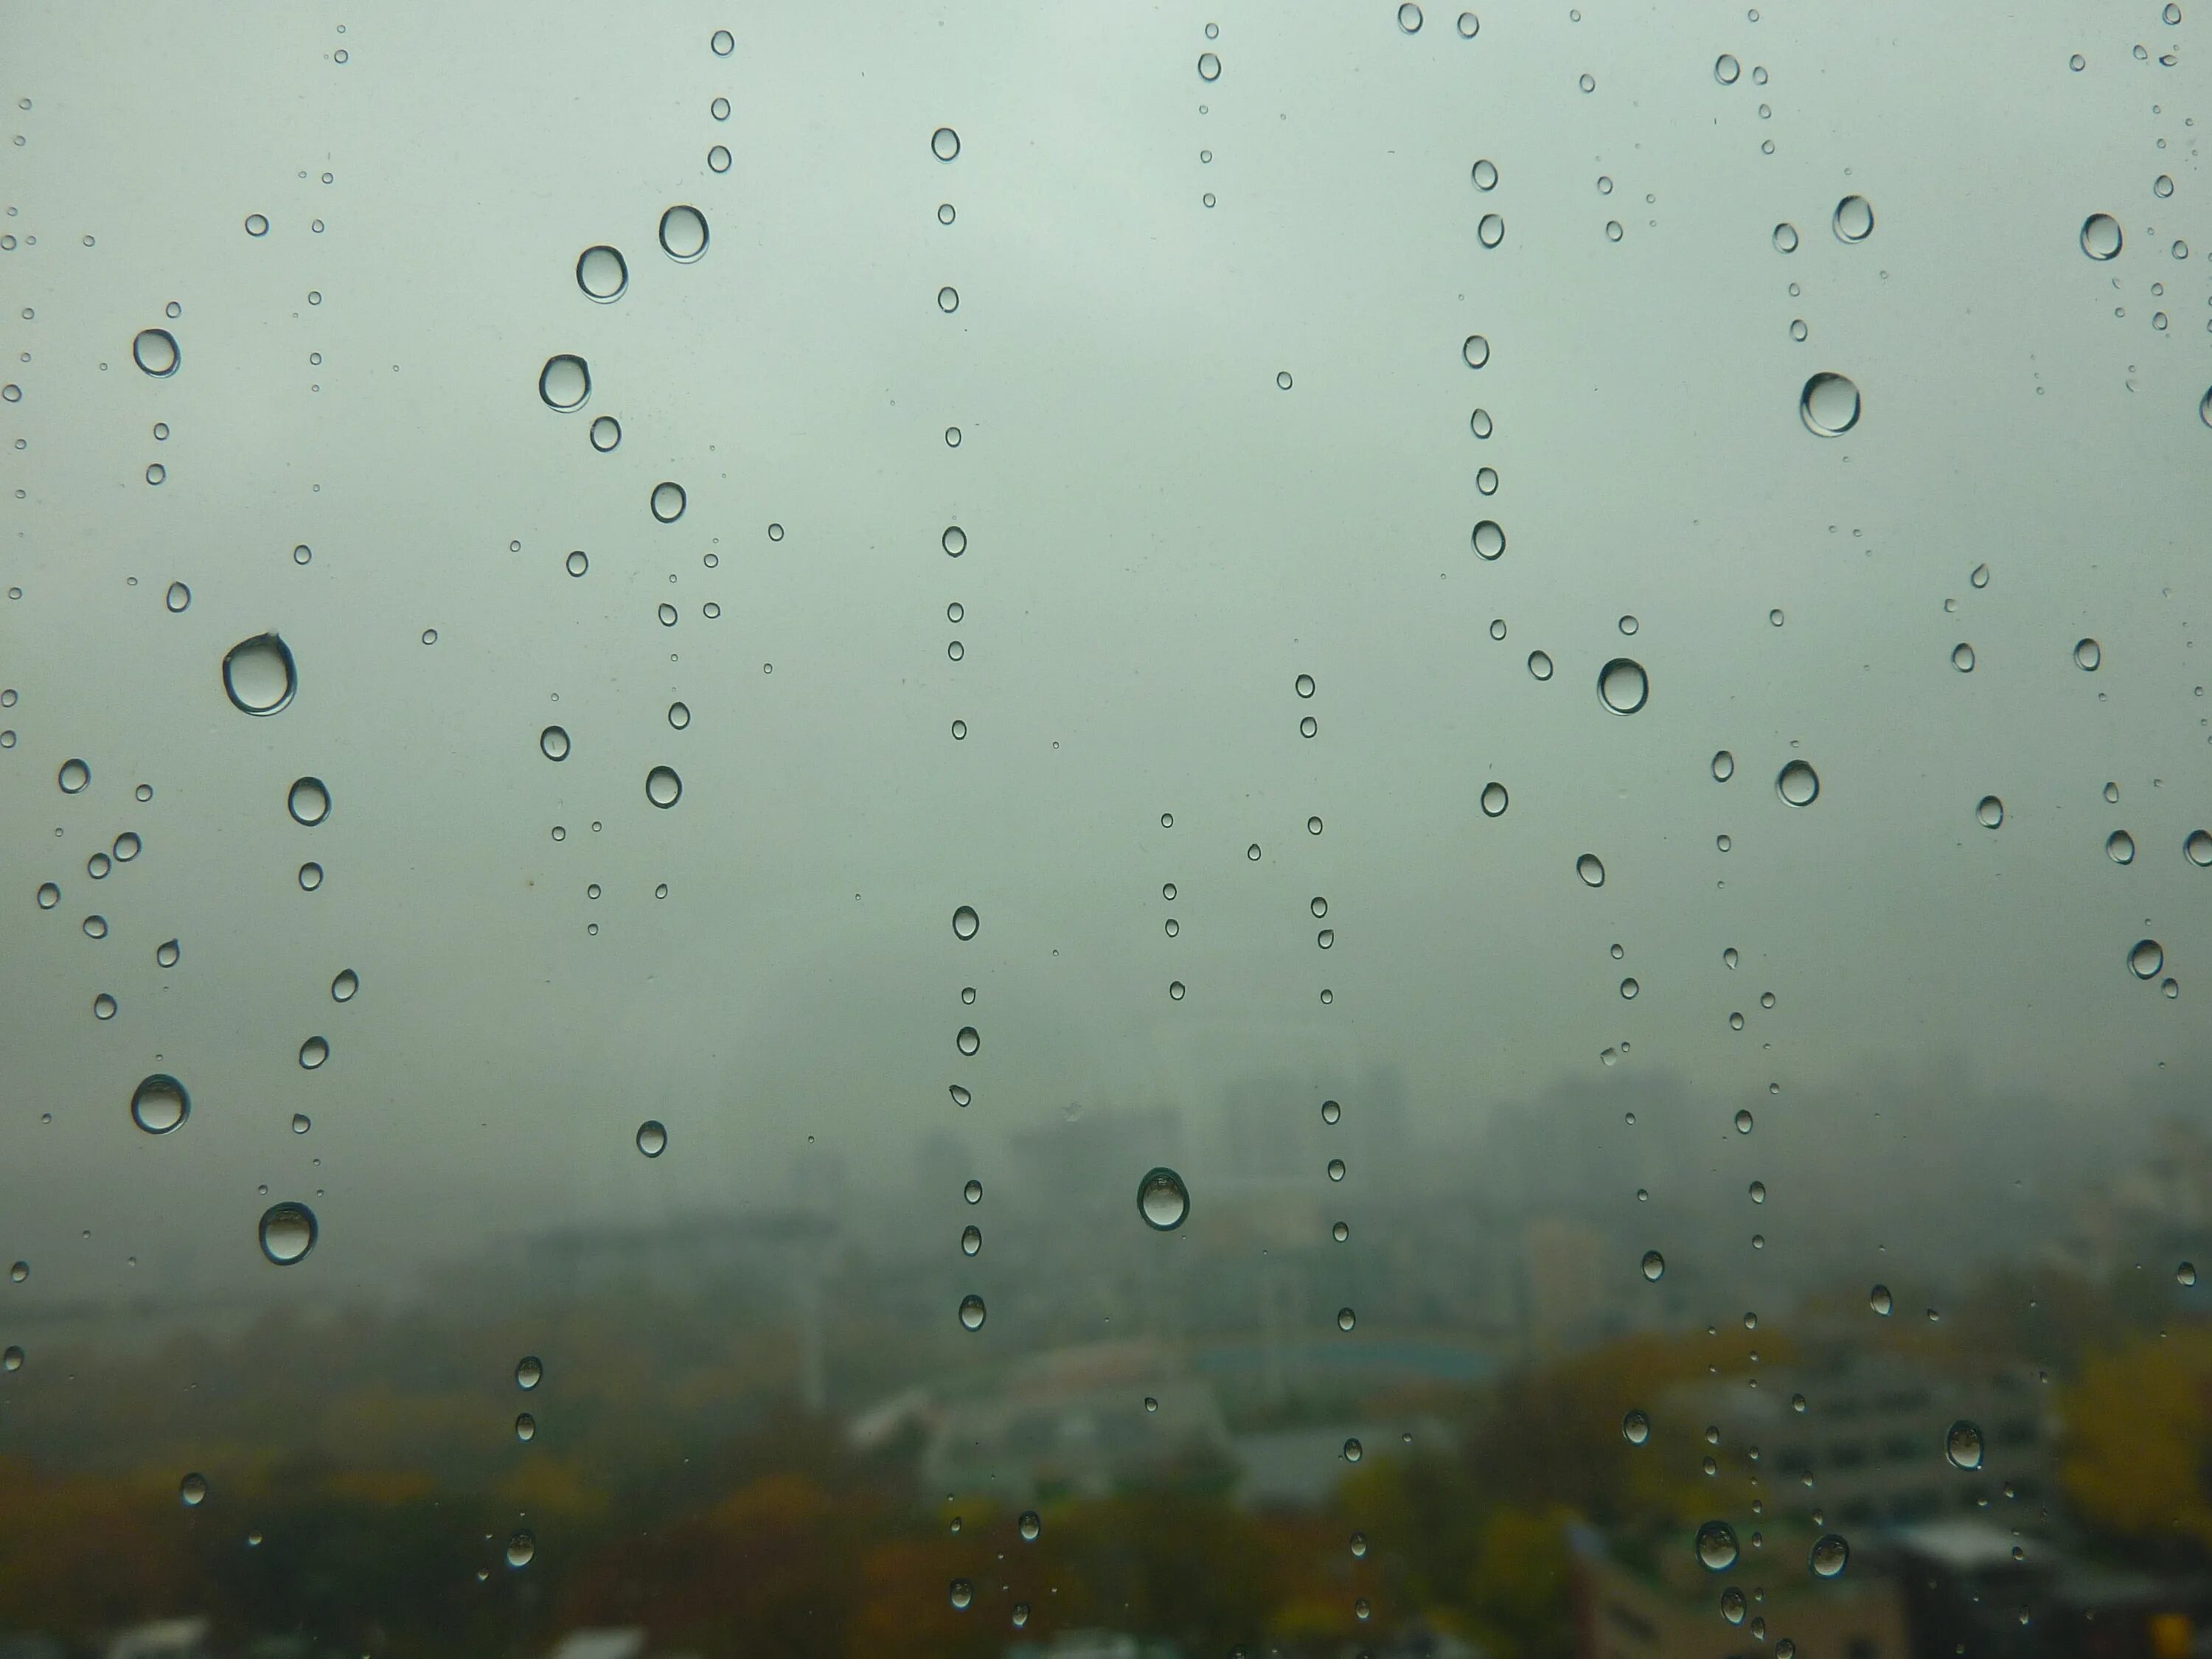 Дождь на стекле. Окно лето дождь. Дождь на стекле фото. Капли дождя на окне картинки.